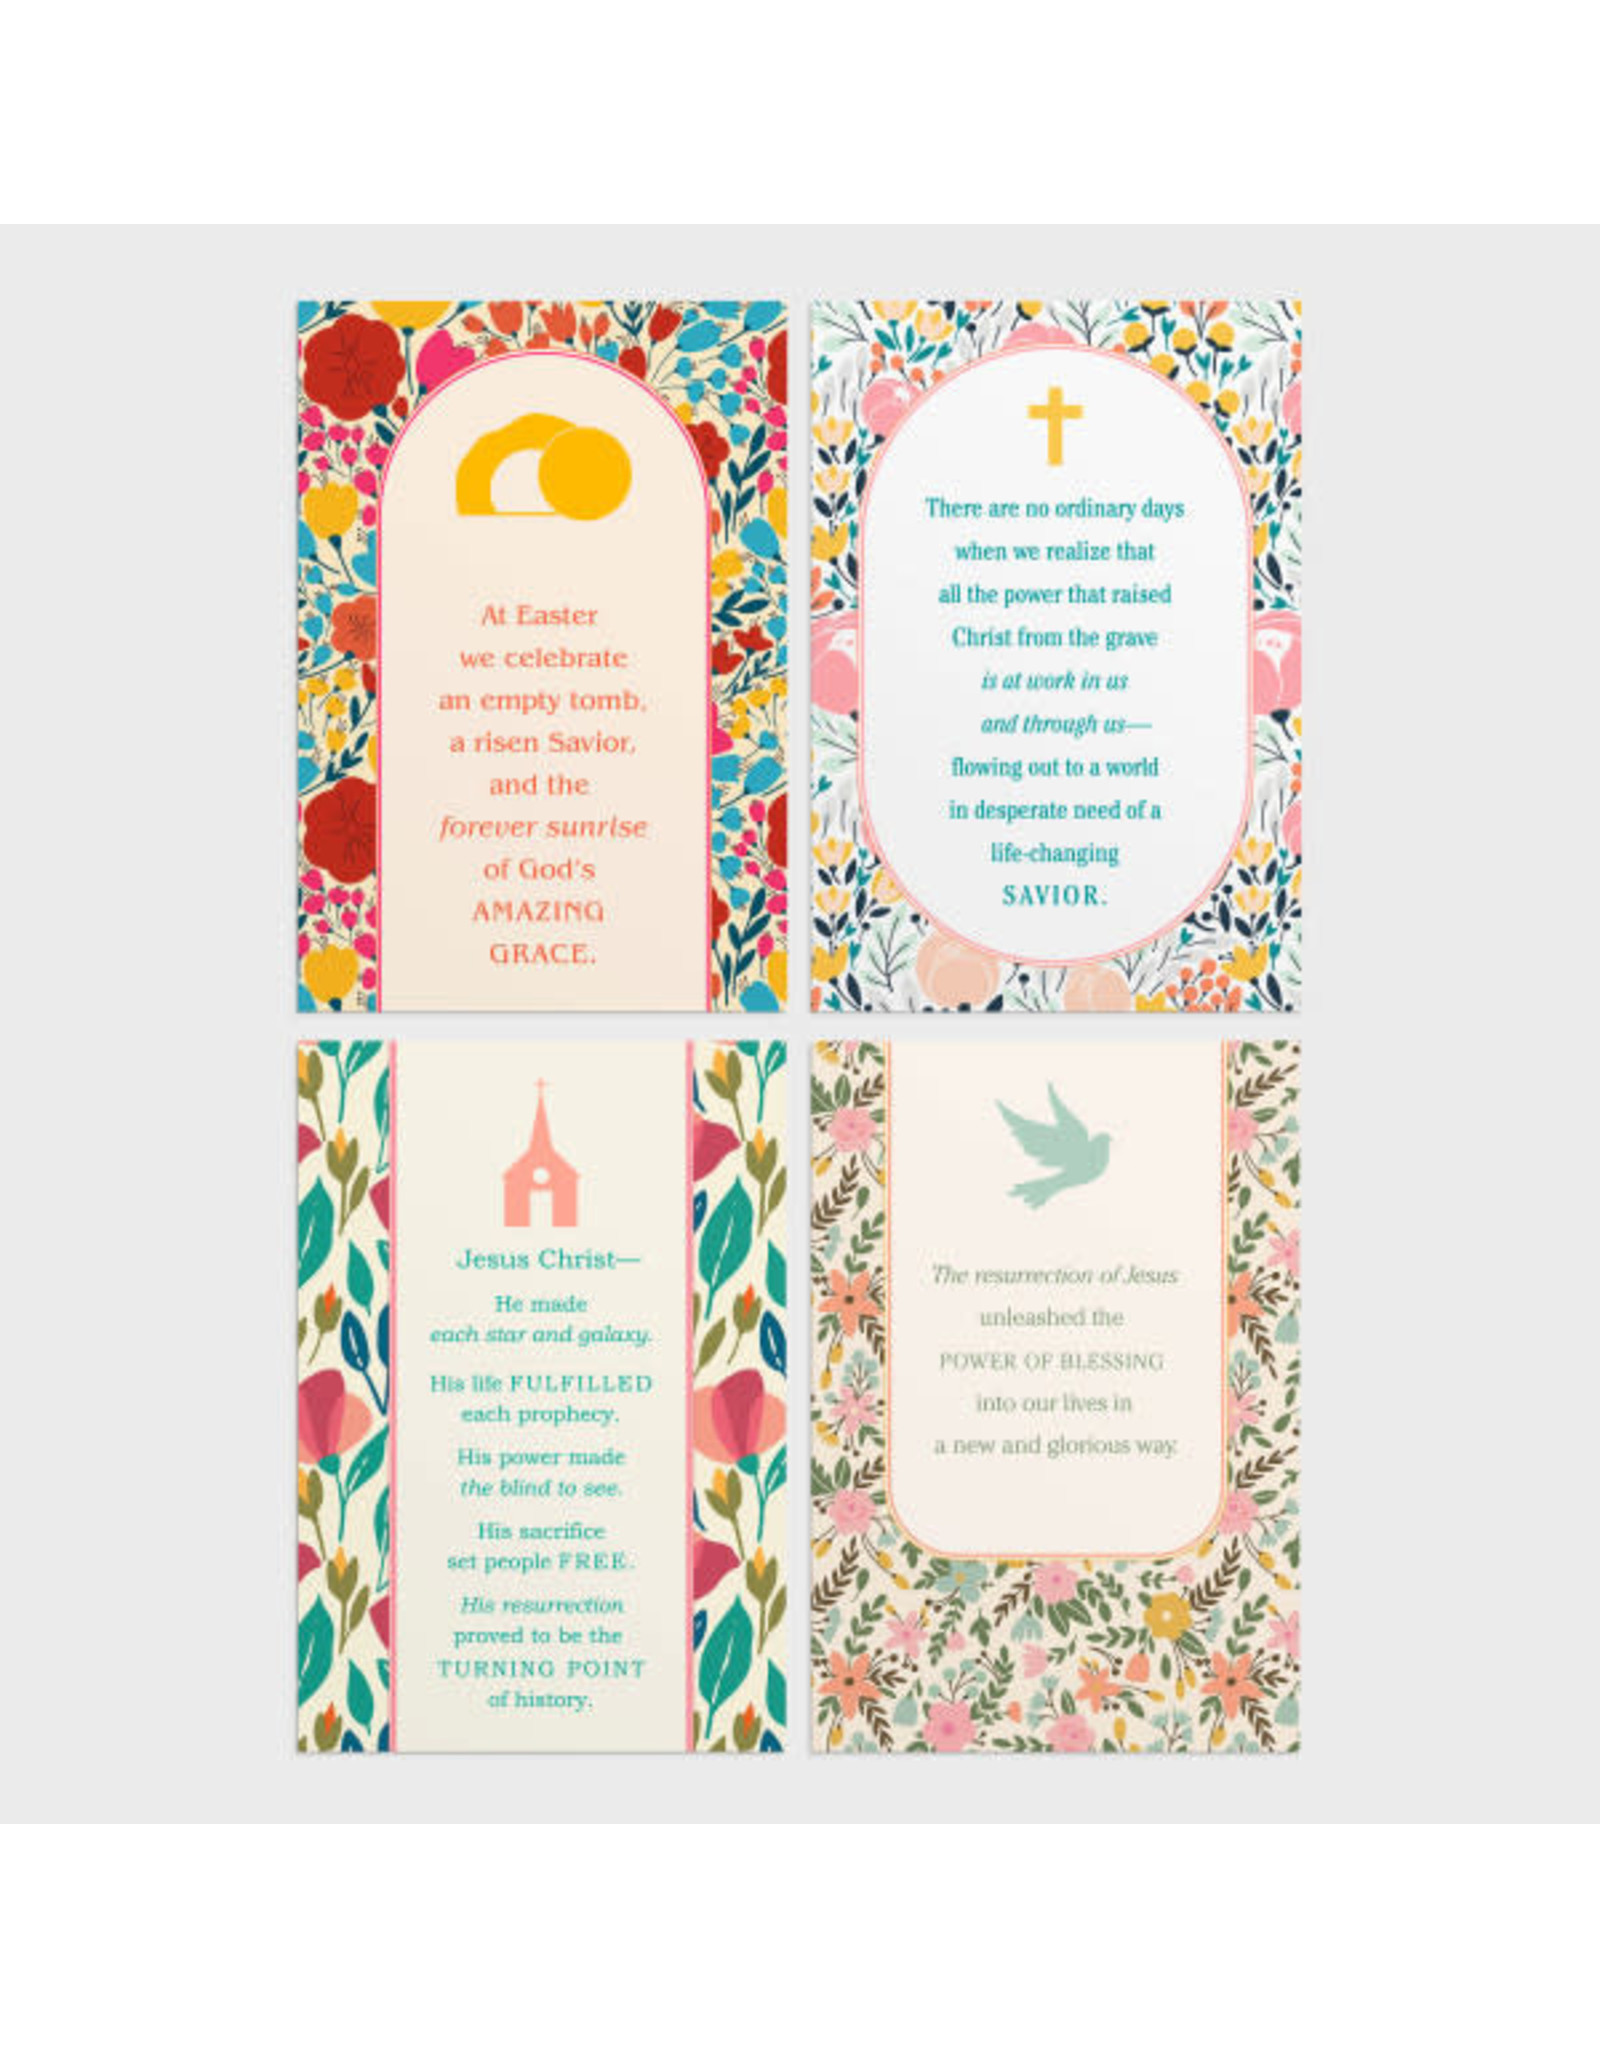 Dayspring Boxed Set of 12 Easter Cards - Sunrise of God's Grace